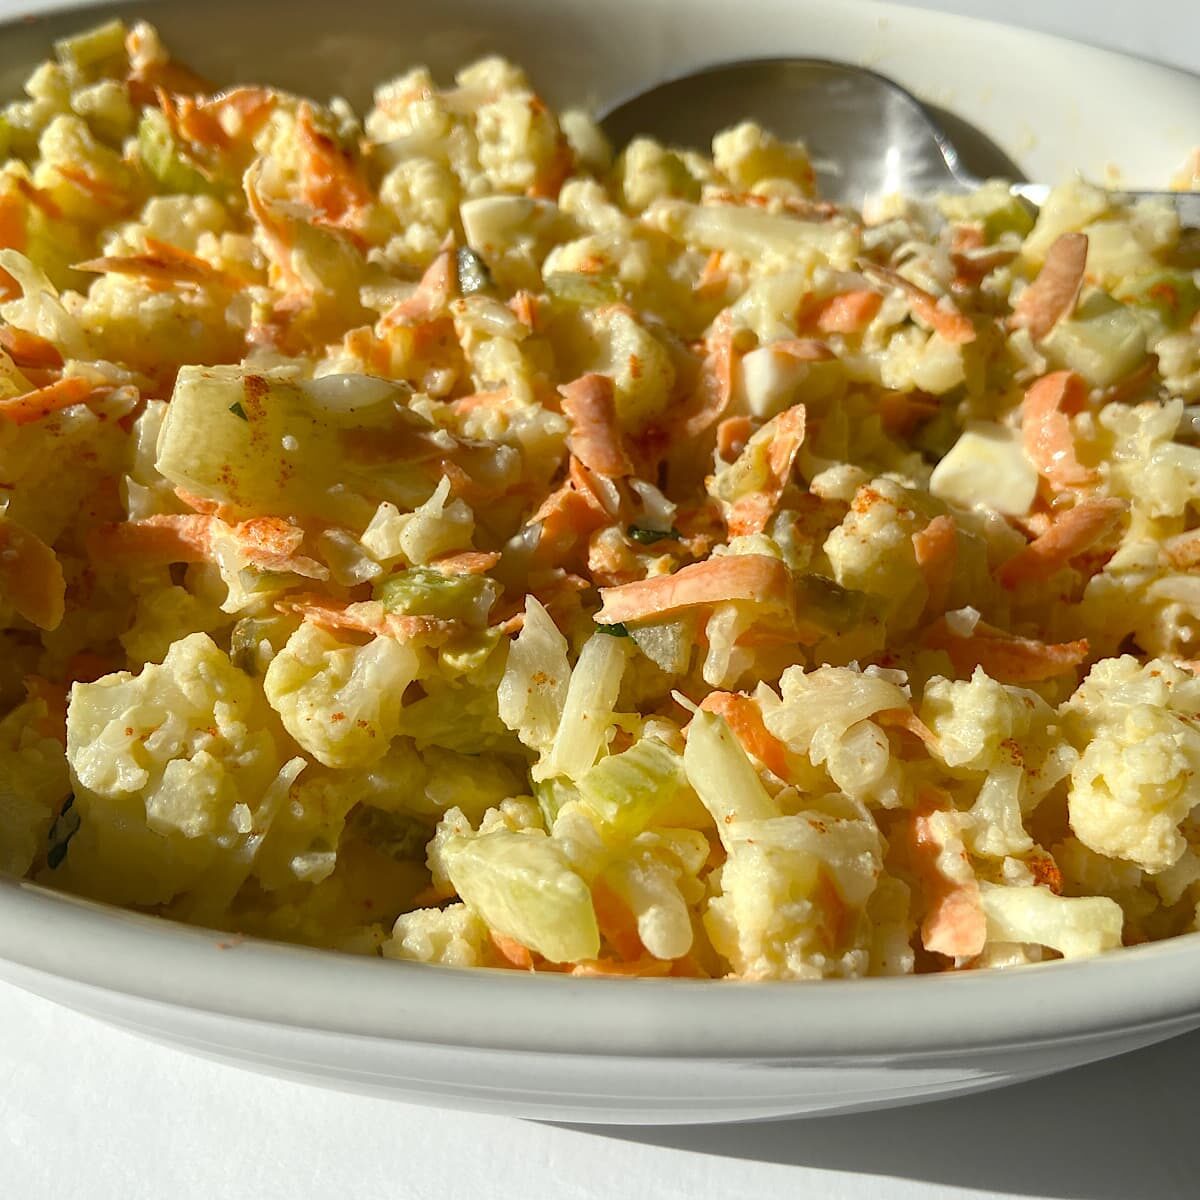 cauliflower potato salad in a serving dish